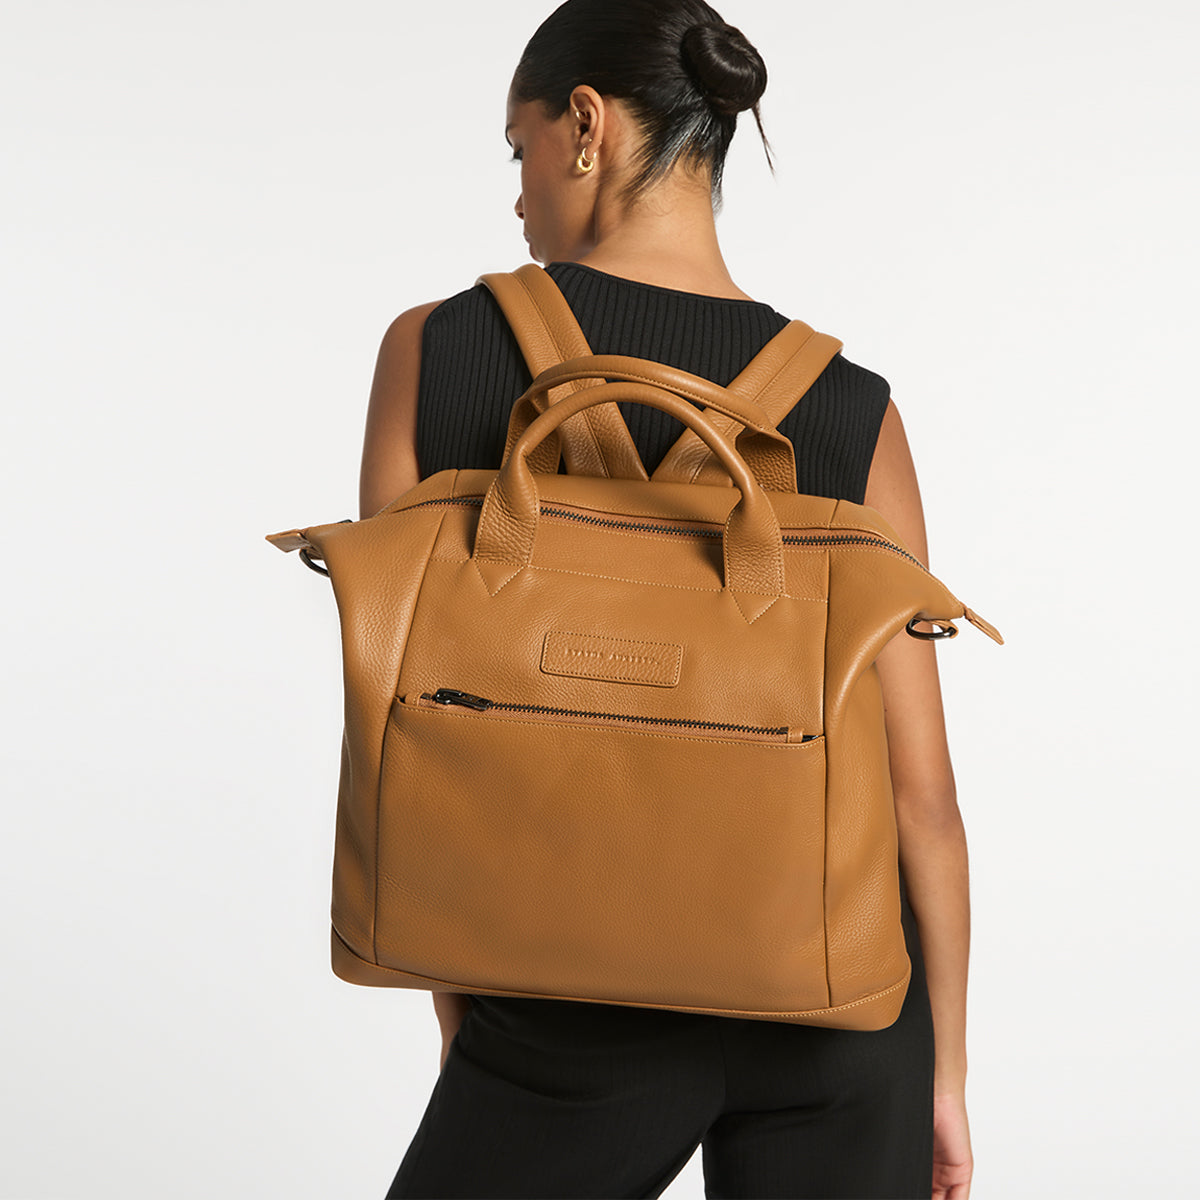 Practical & Stylish Leather Backpacks